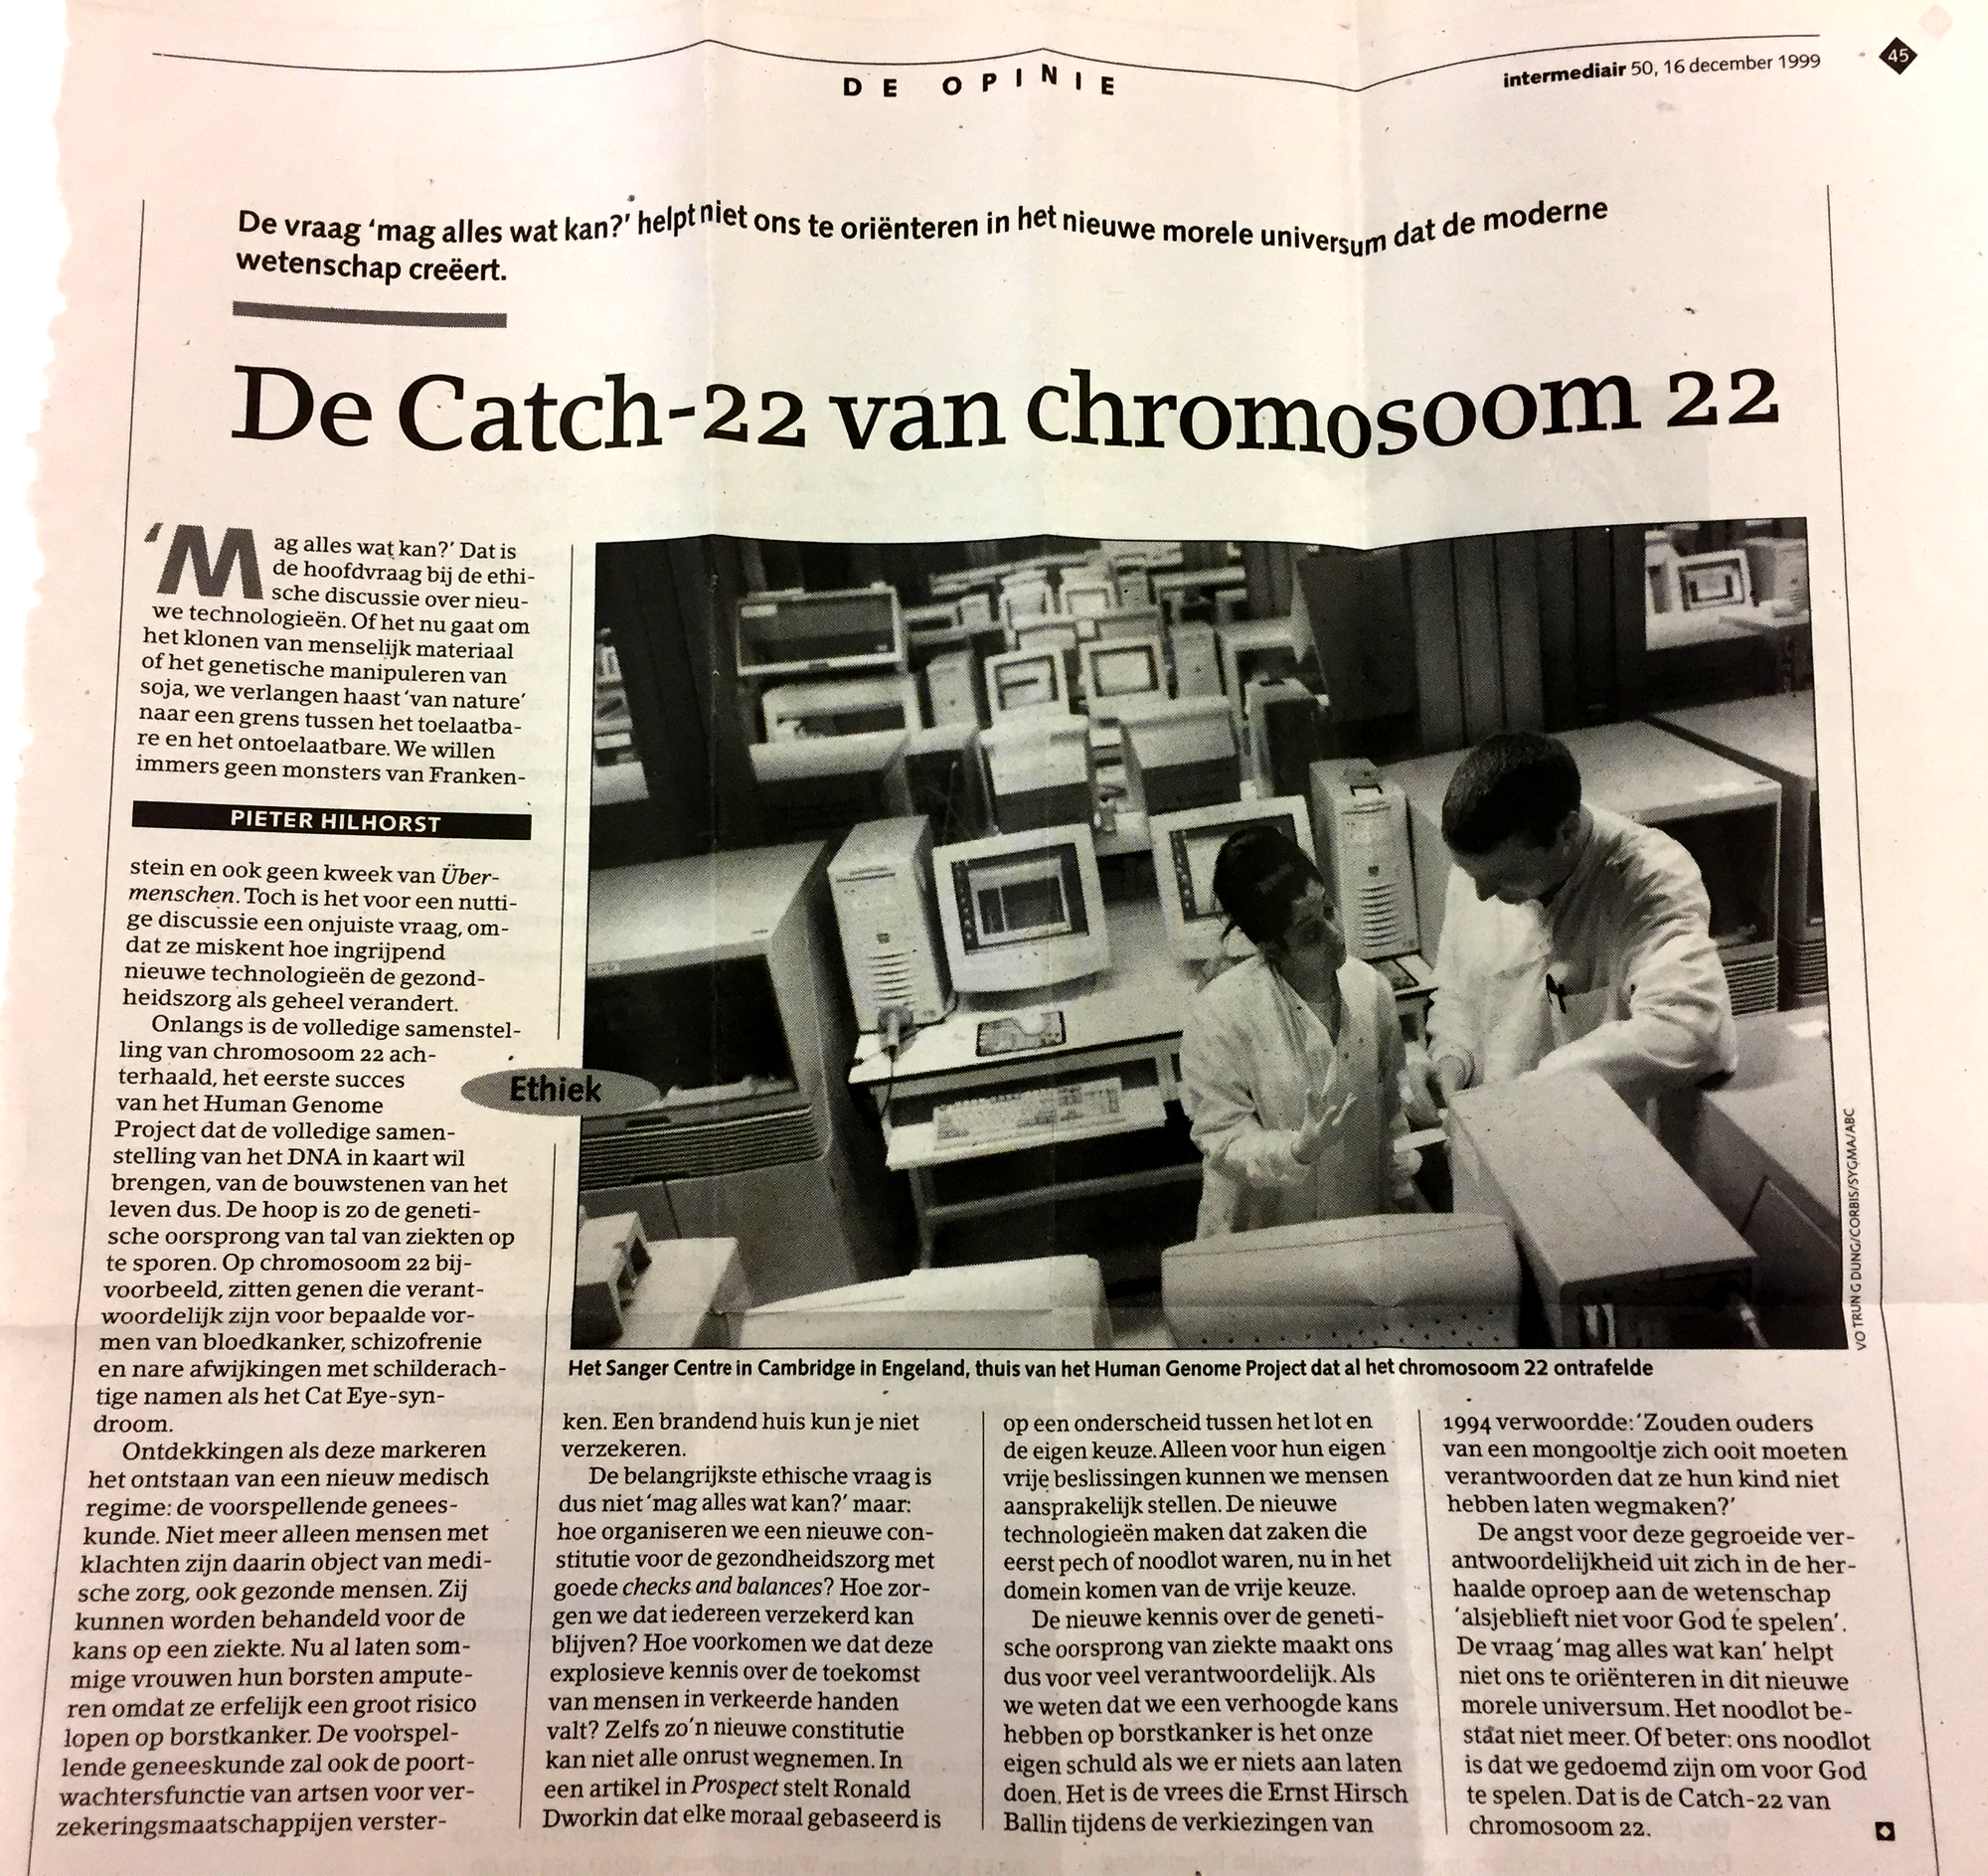 newspaper clipping in Dutch featuring the title: "De Catch-22 van chromosoom 22"